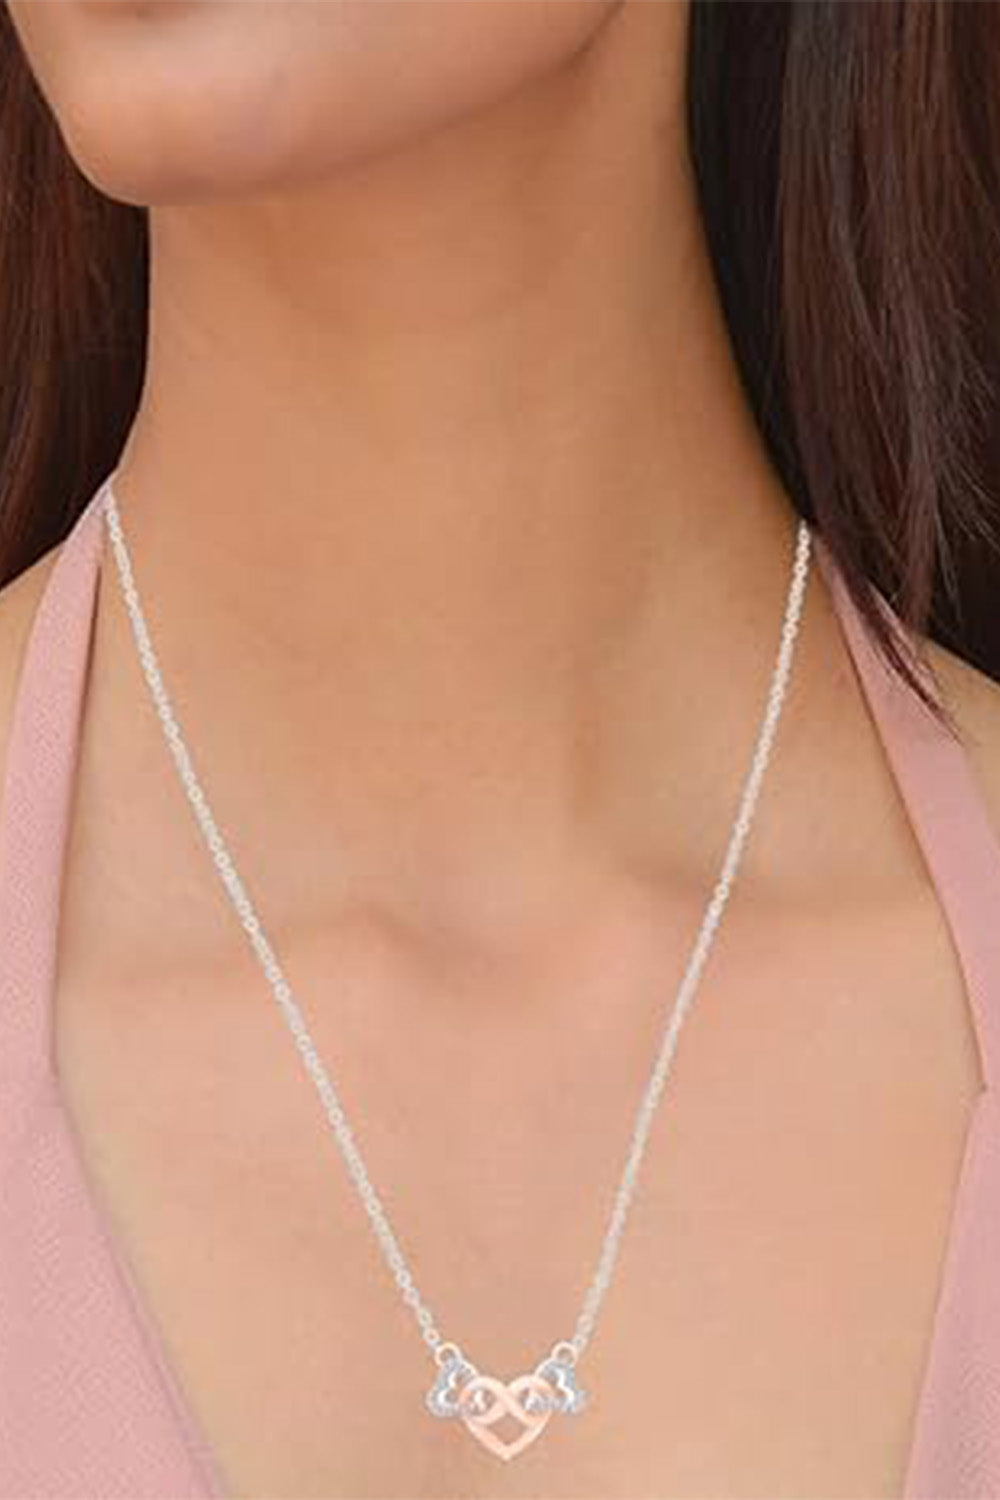 Buy Infinity Love Heart Interlocking Pendant Necklace